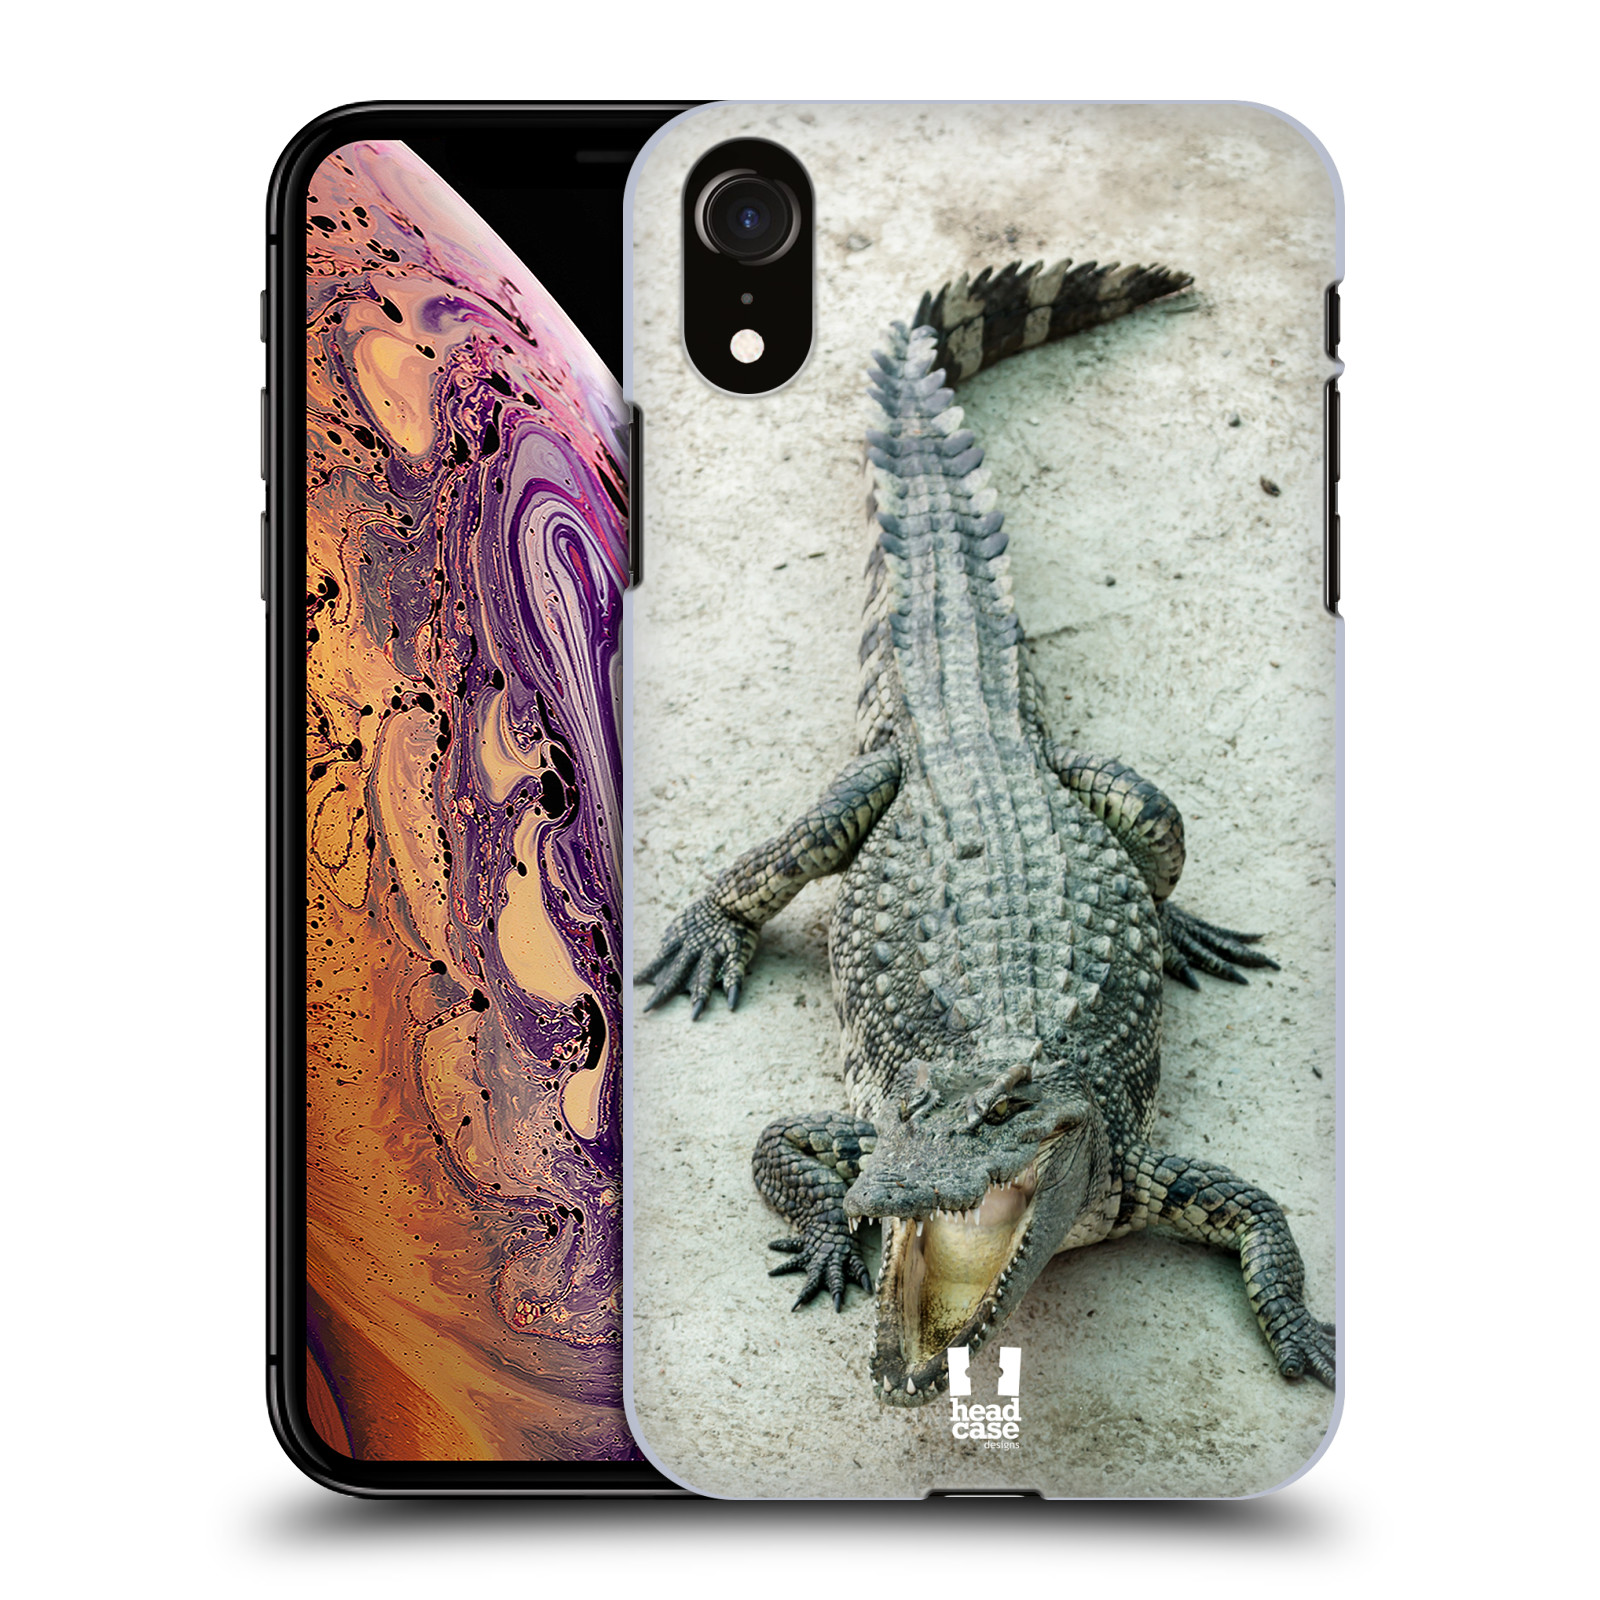 HEAD CASE plastový obal na mobil Apple Iphone XR vzor Divočina, Divoký život a zvířata foto KROKODÝL, KAJMAN